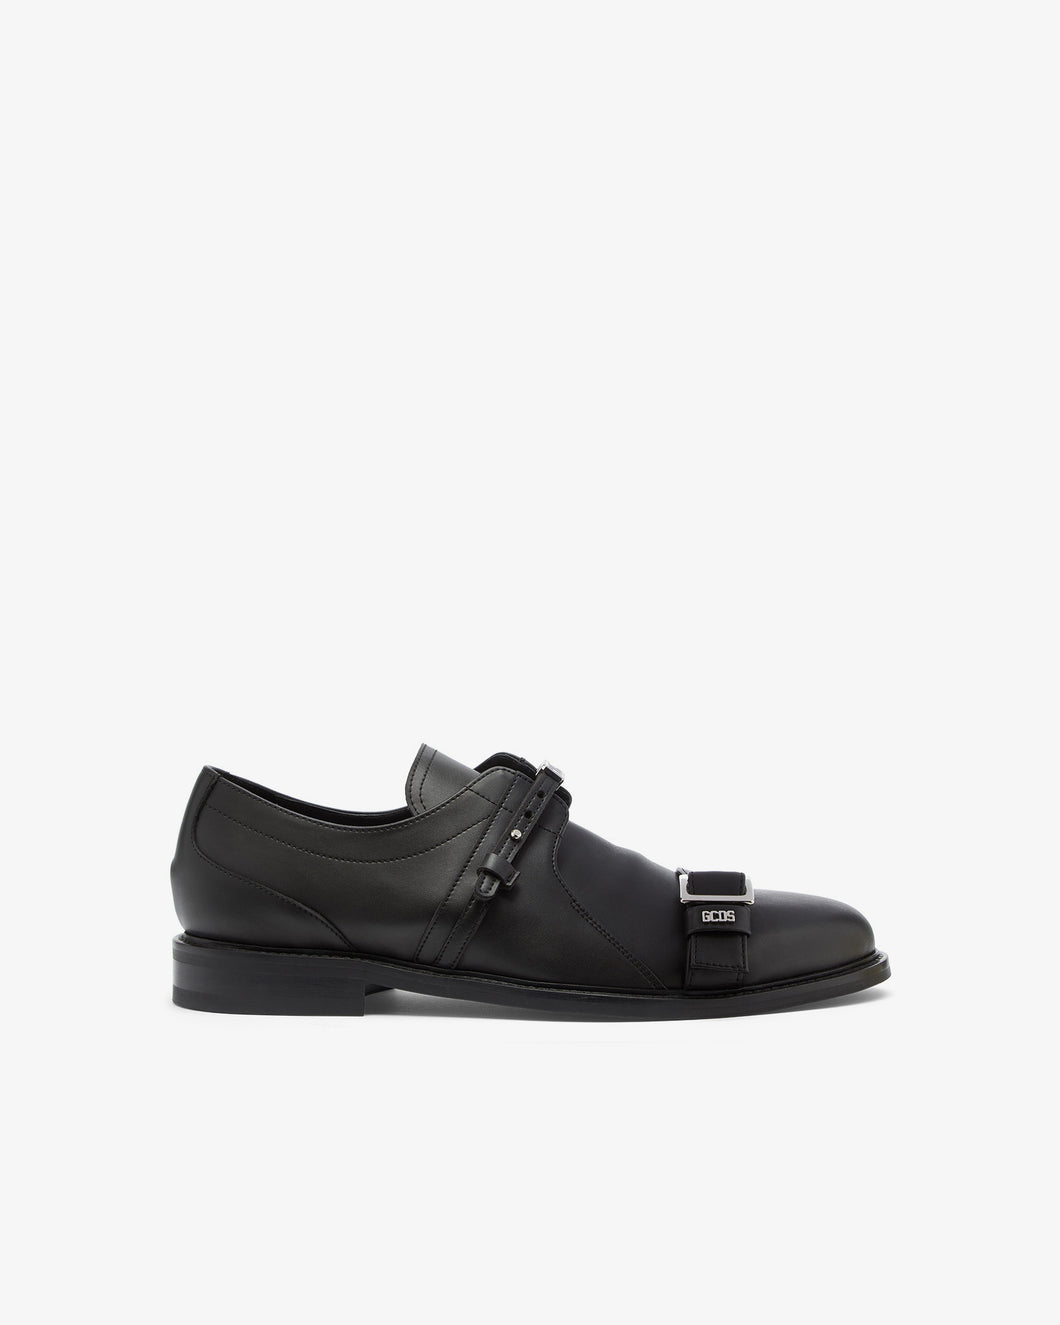 Multi Lace Buckle Derby Shoes | Men Loafers Black | GCDS®